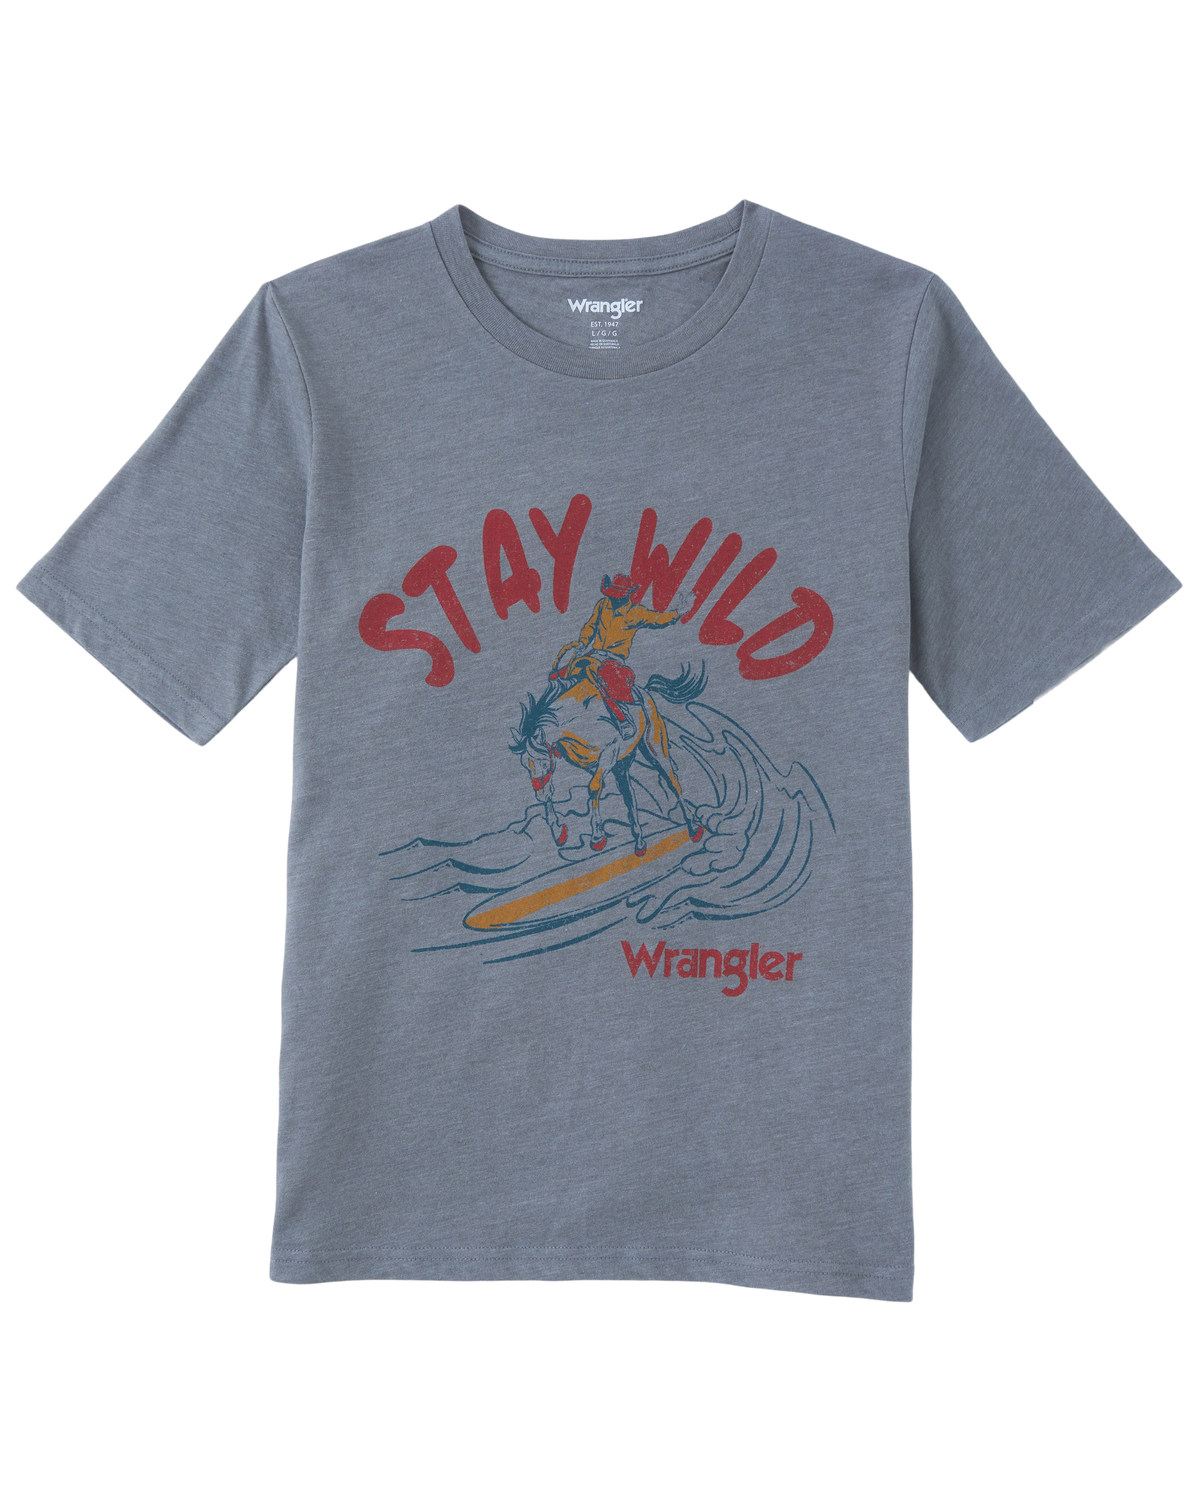 Wrangler Boys' Stay Wild Short Sleeve Graphic T-Shirt